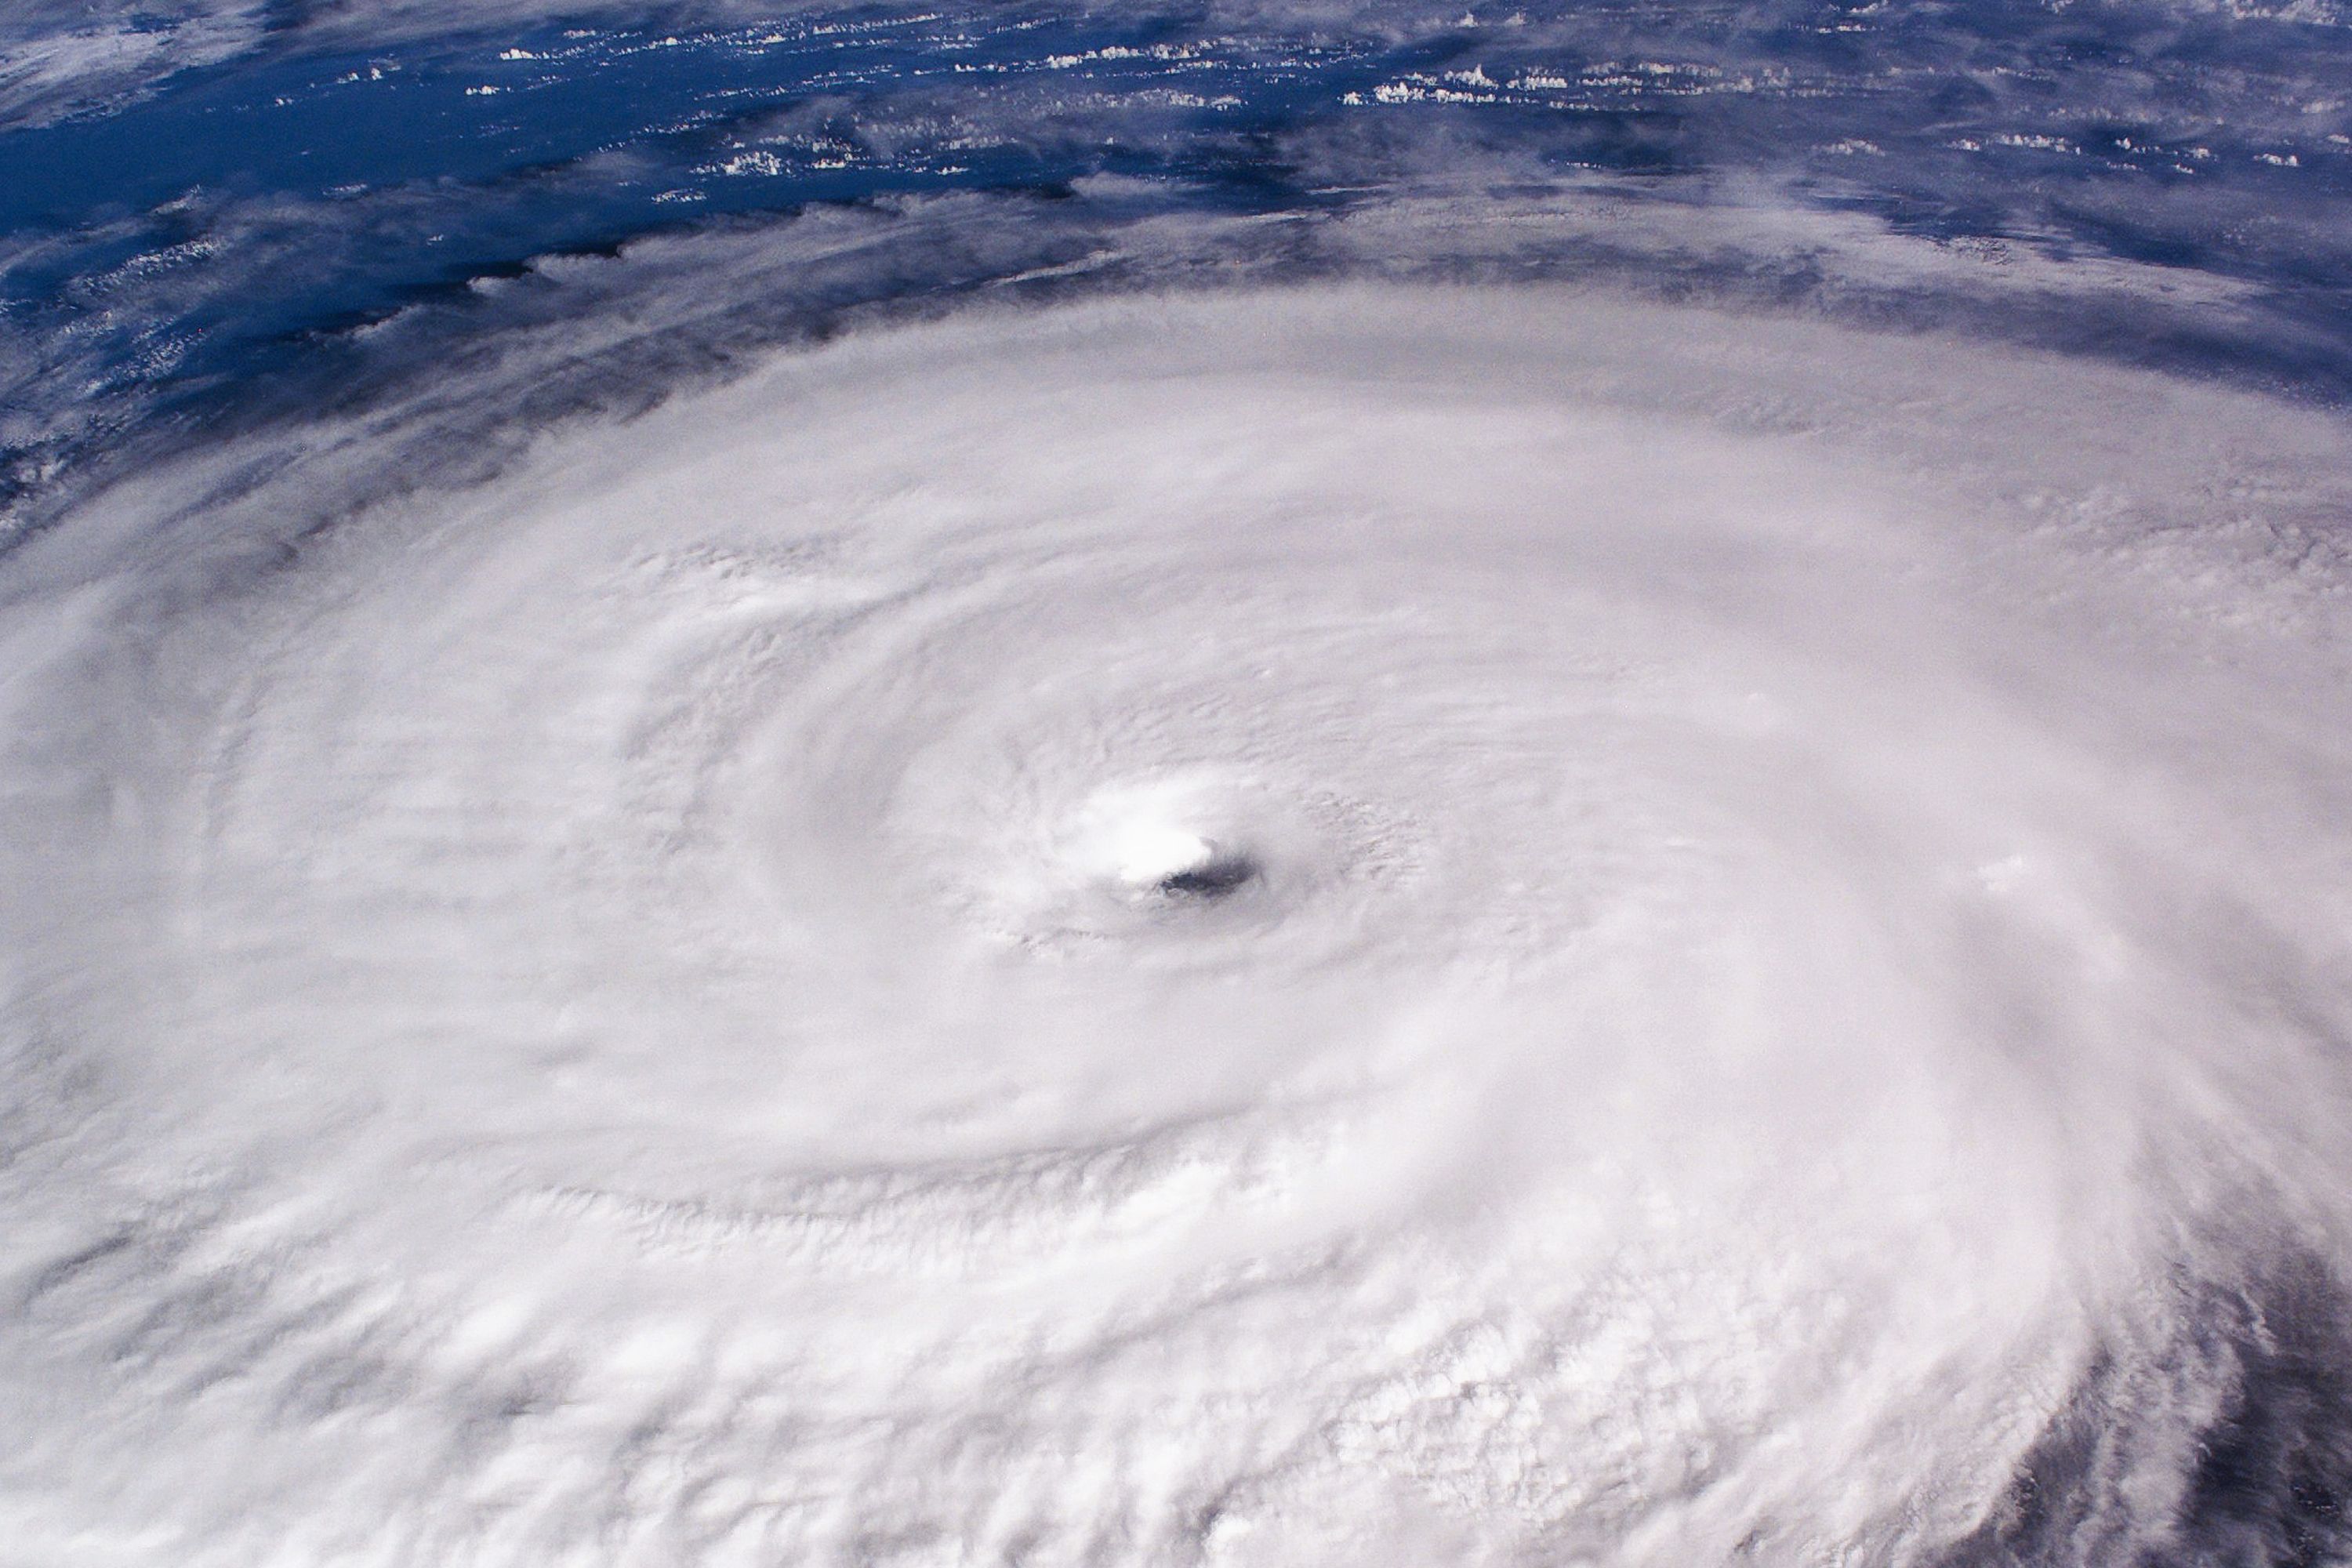 Typhoon over planet Earth - satellite photo.